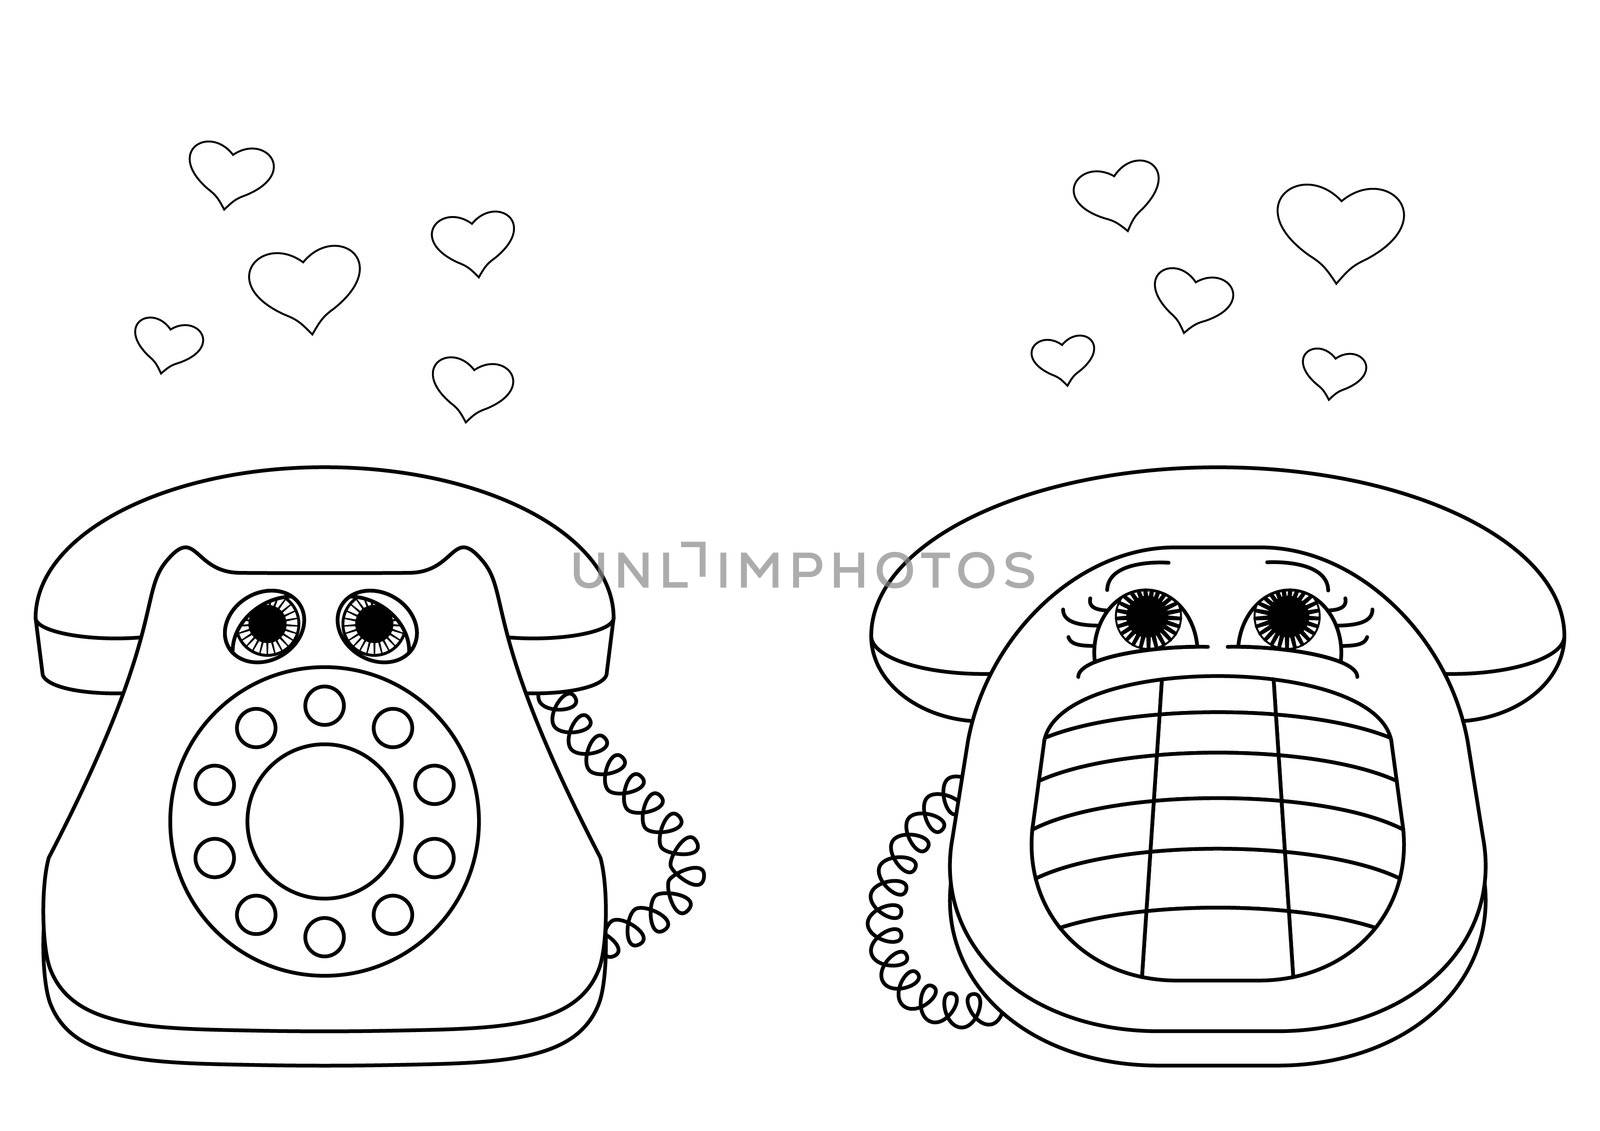 Valentines cartoon: desktop phones, enamoured each other, communicate calls, contours.